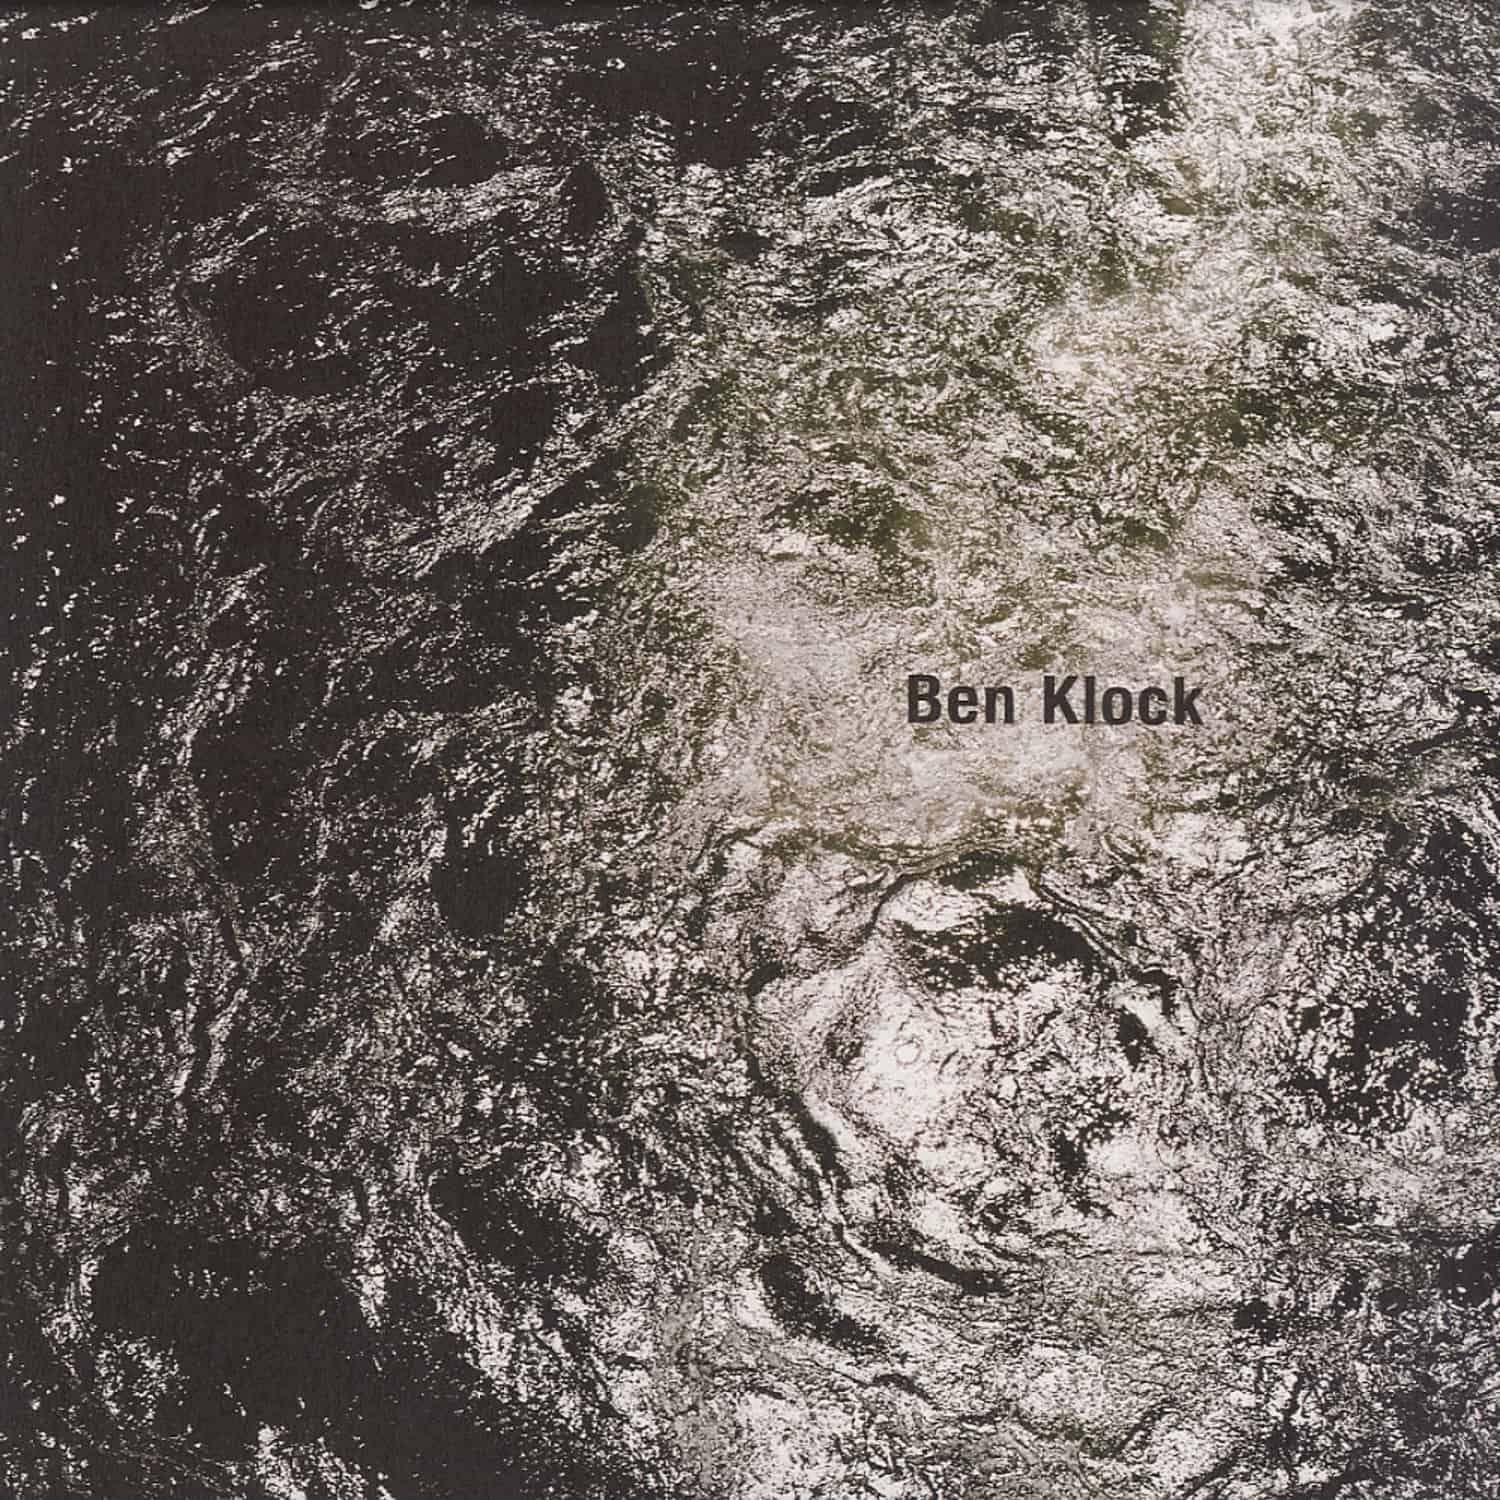 Ben Klock - COMPRESSION SESSION EP